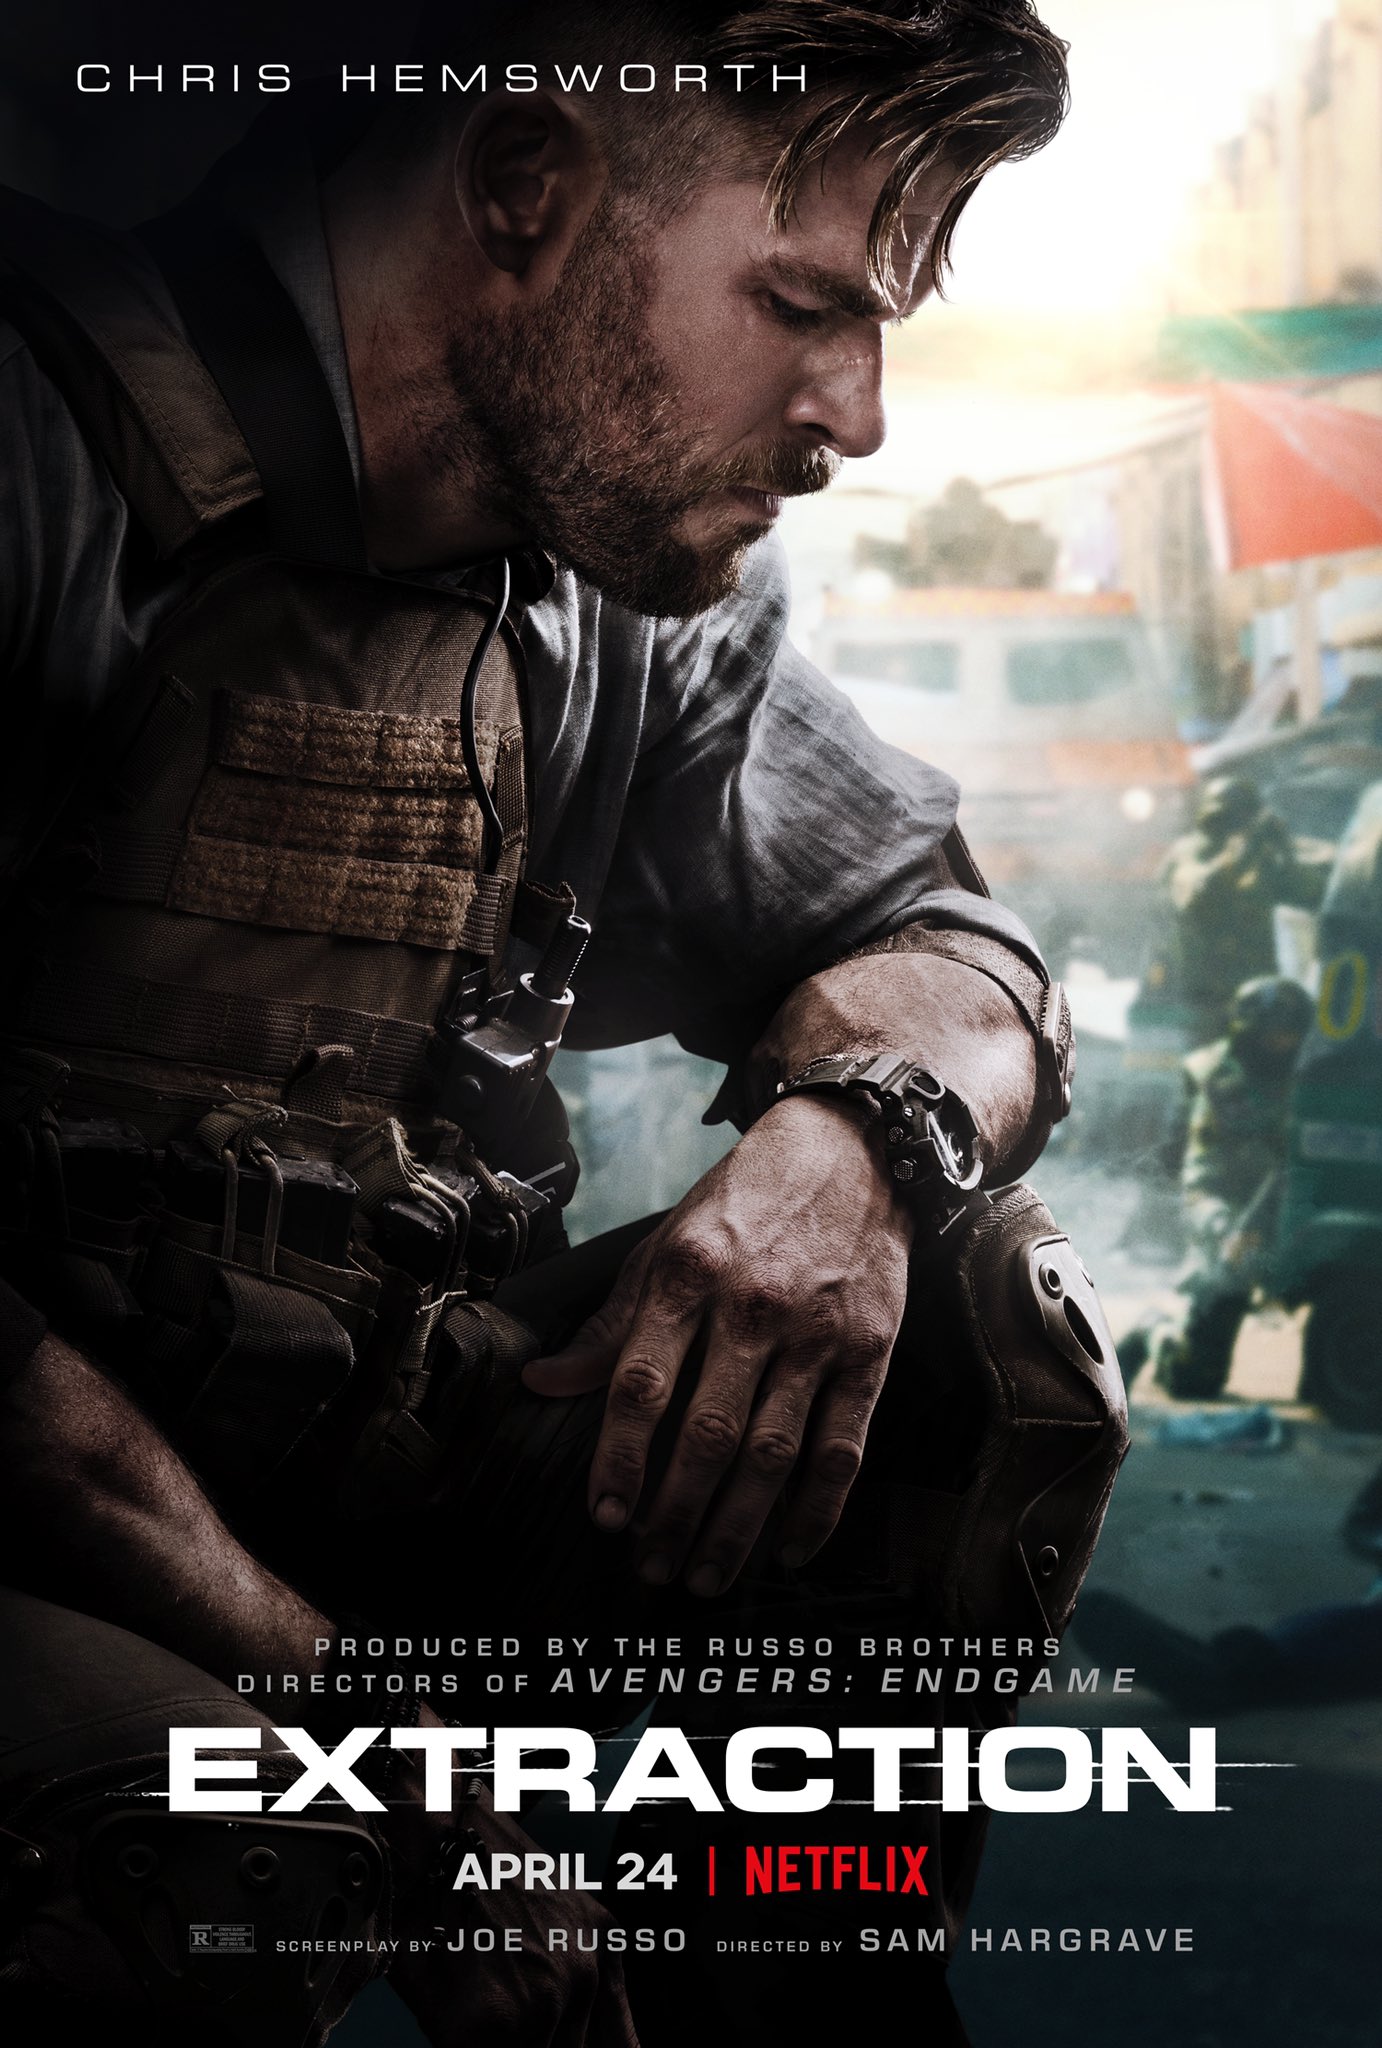 Chris Hemsworth Extraction poster